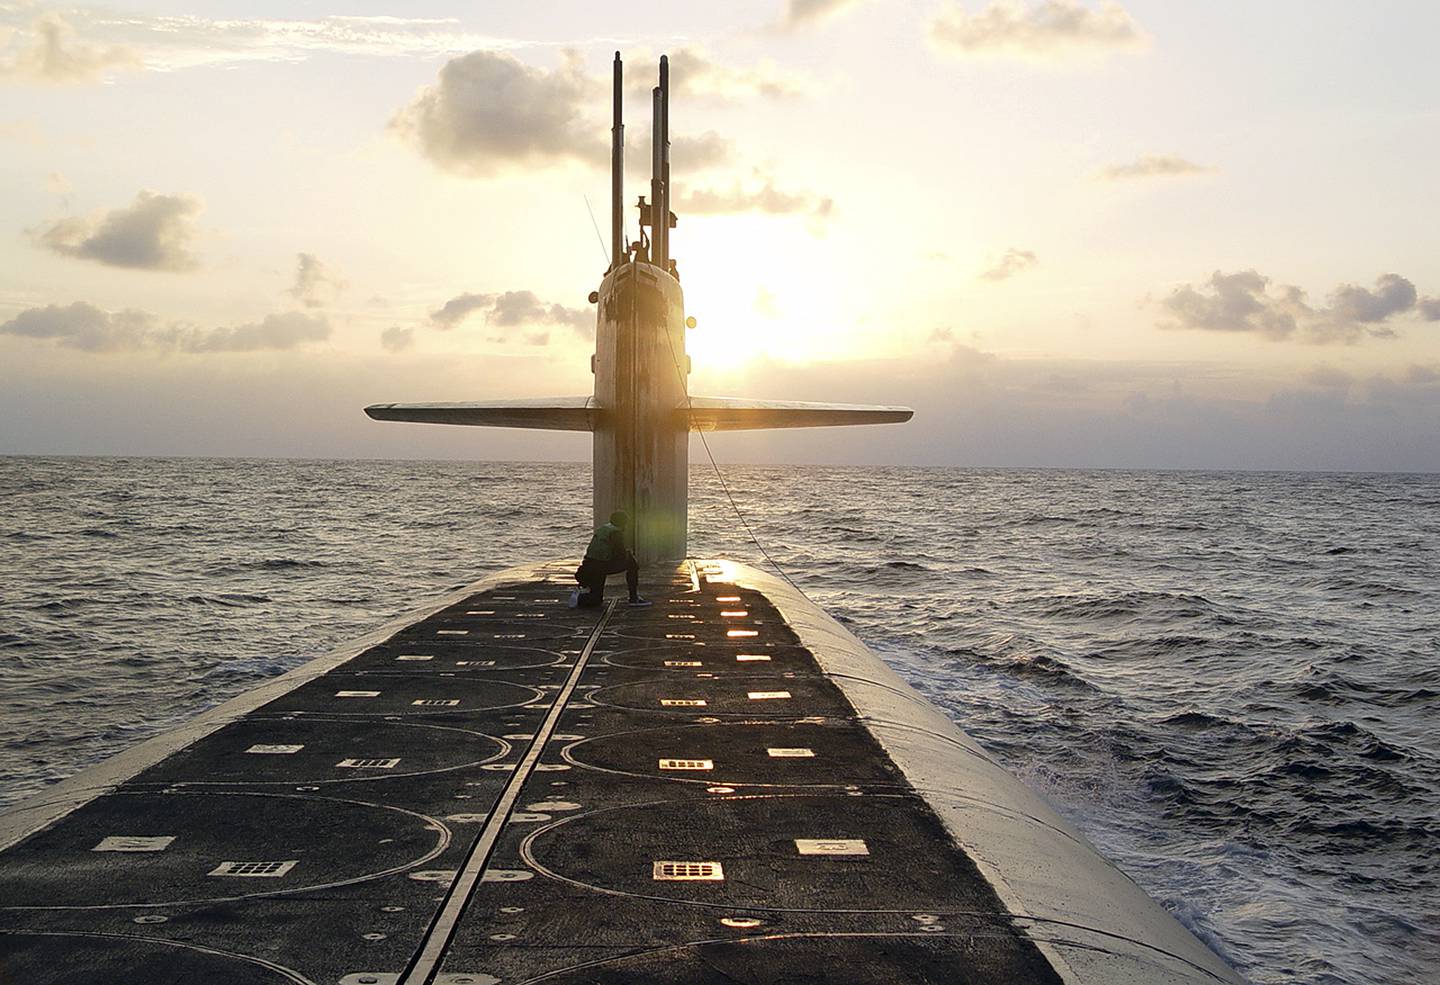 Ohio-class ballistic-missile submarine USS Wyoming